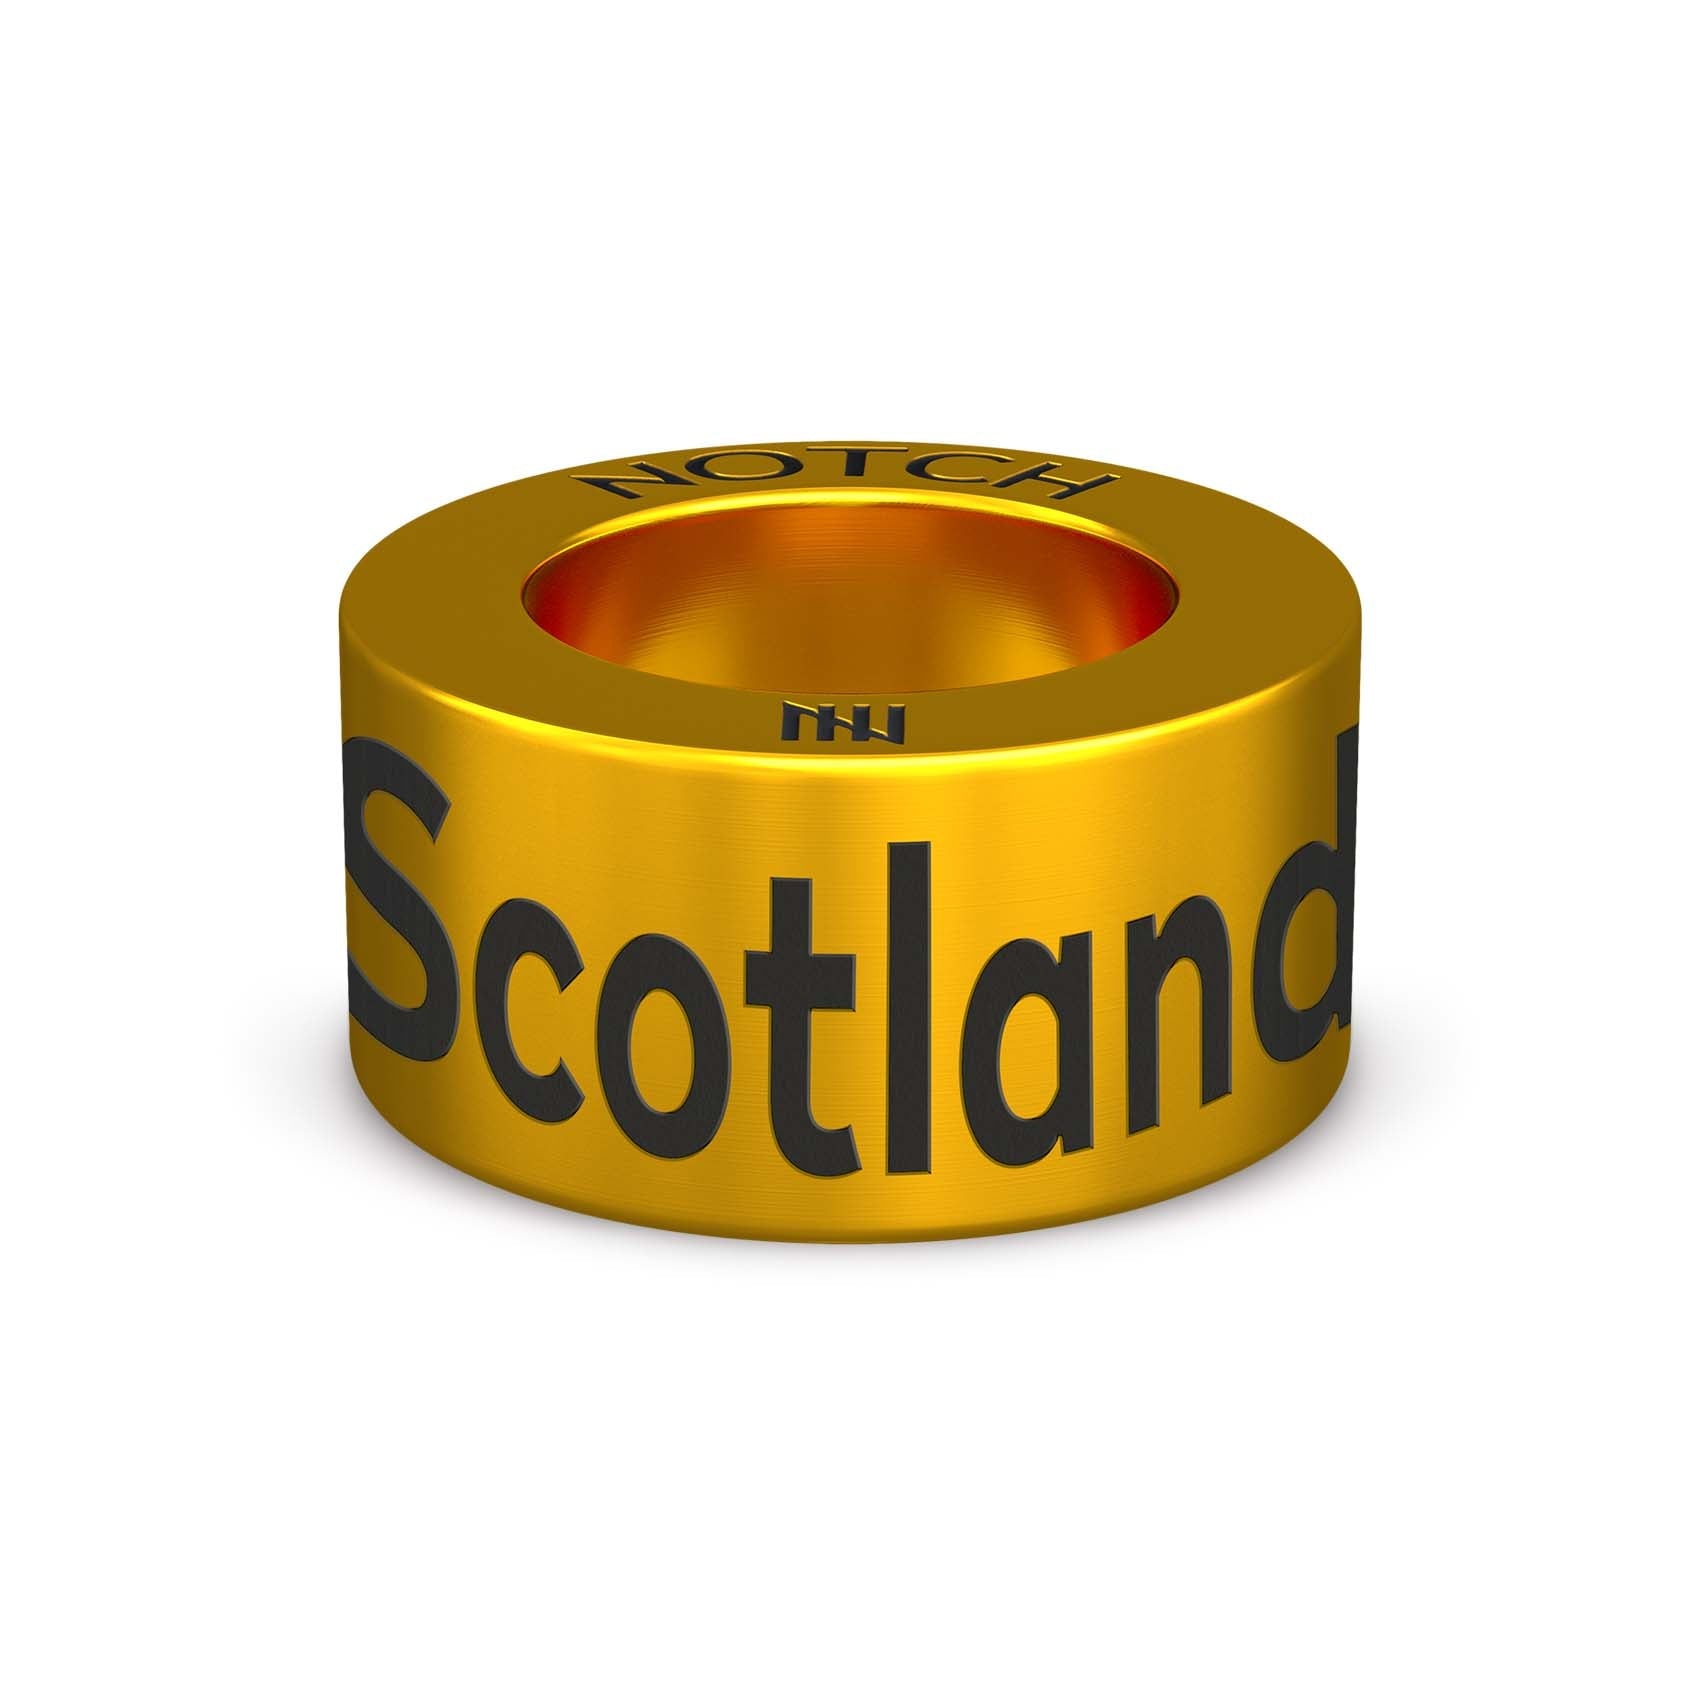 Scotland by Cobbs